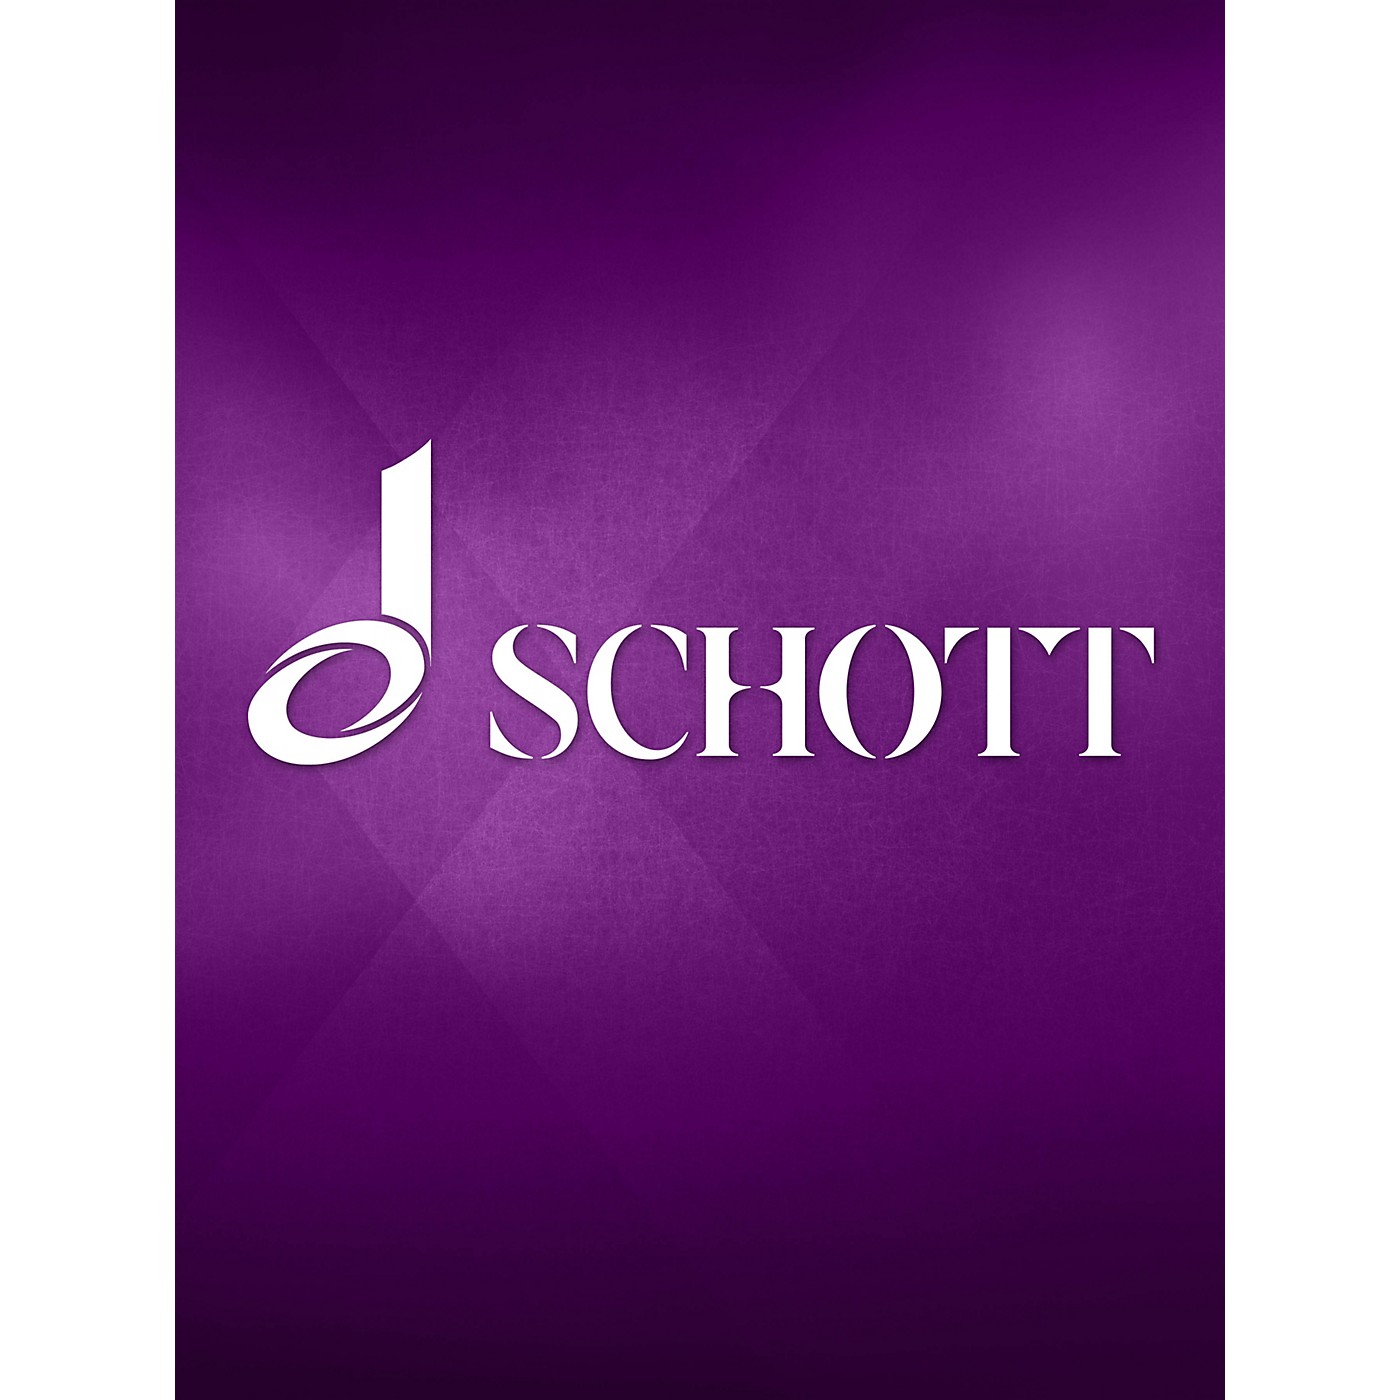 Schott Cello Concerto (Cello Part) Schott Series Composed by Priaulx Rainier thumbnail